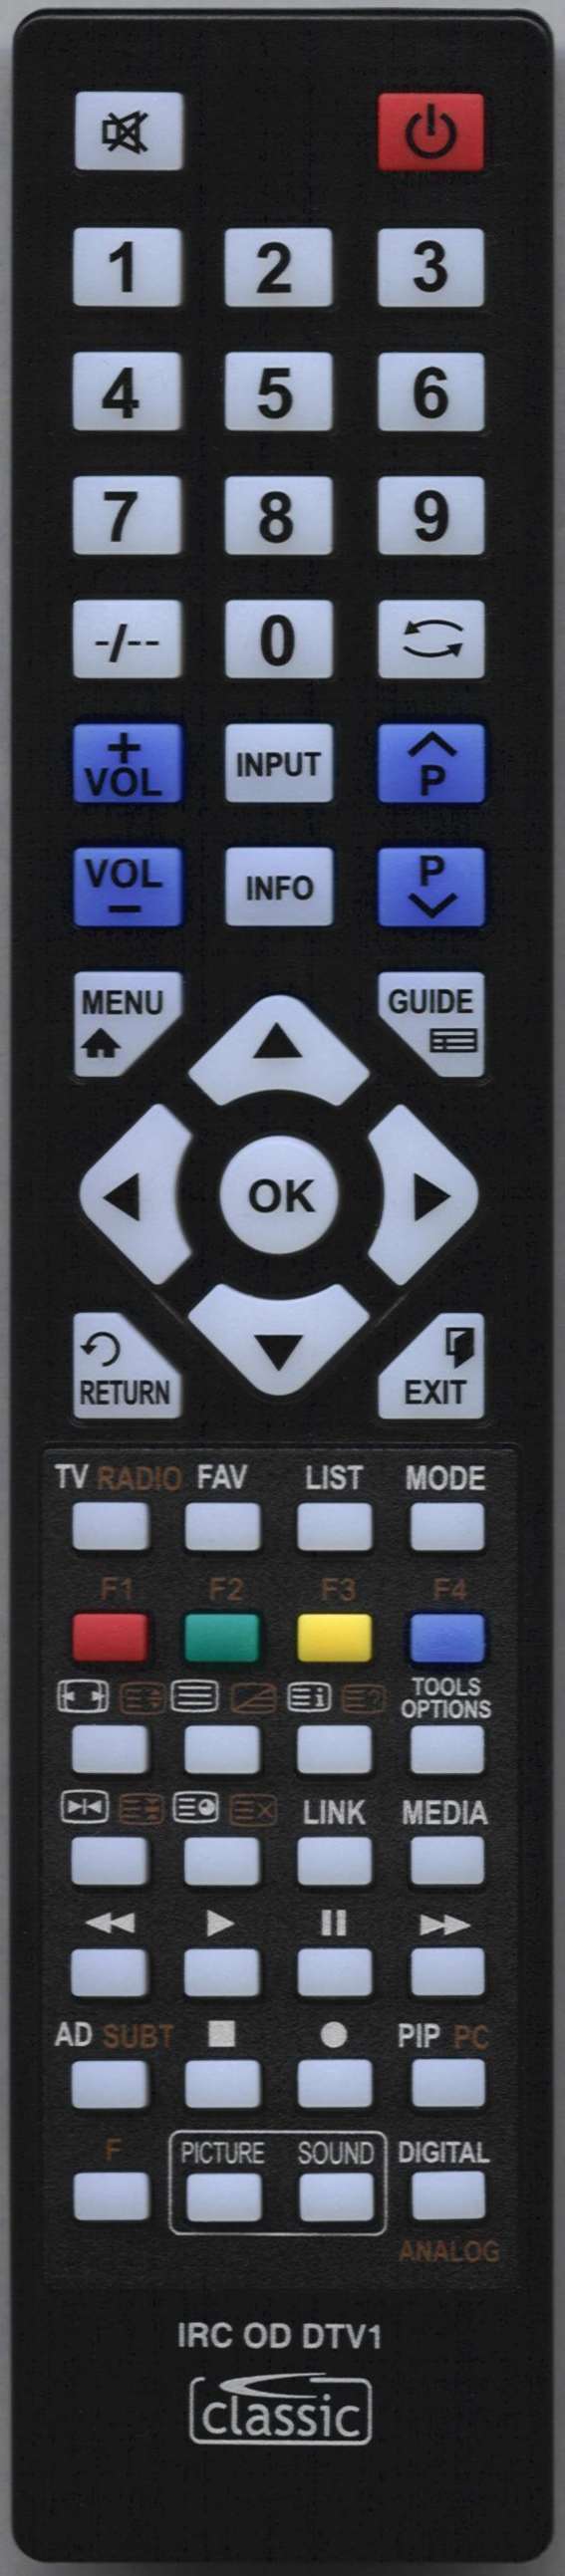 Baird 19R1 Remote Control